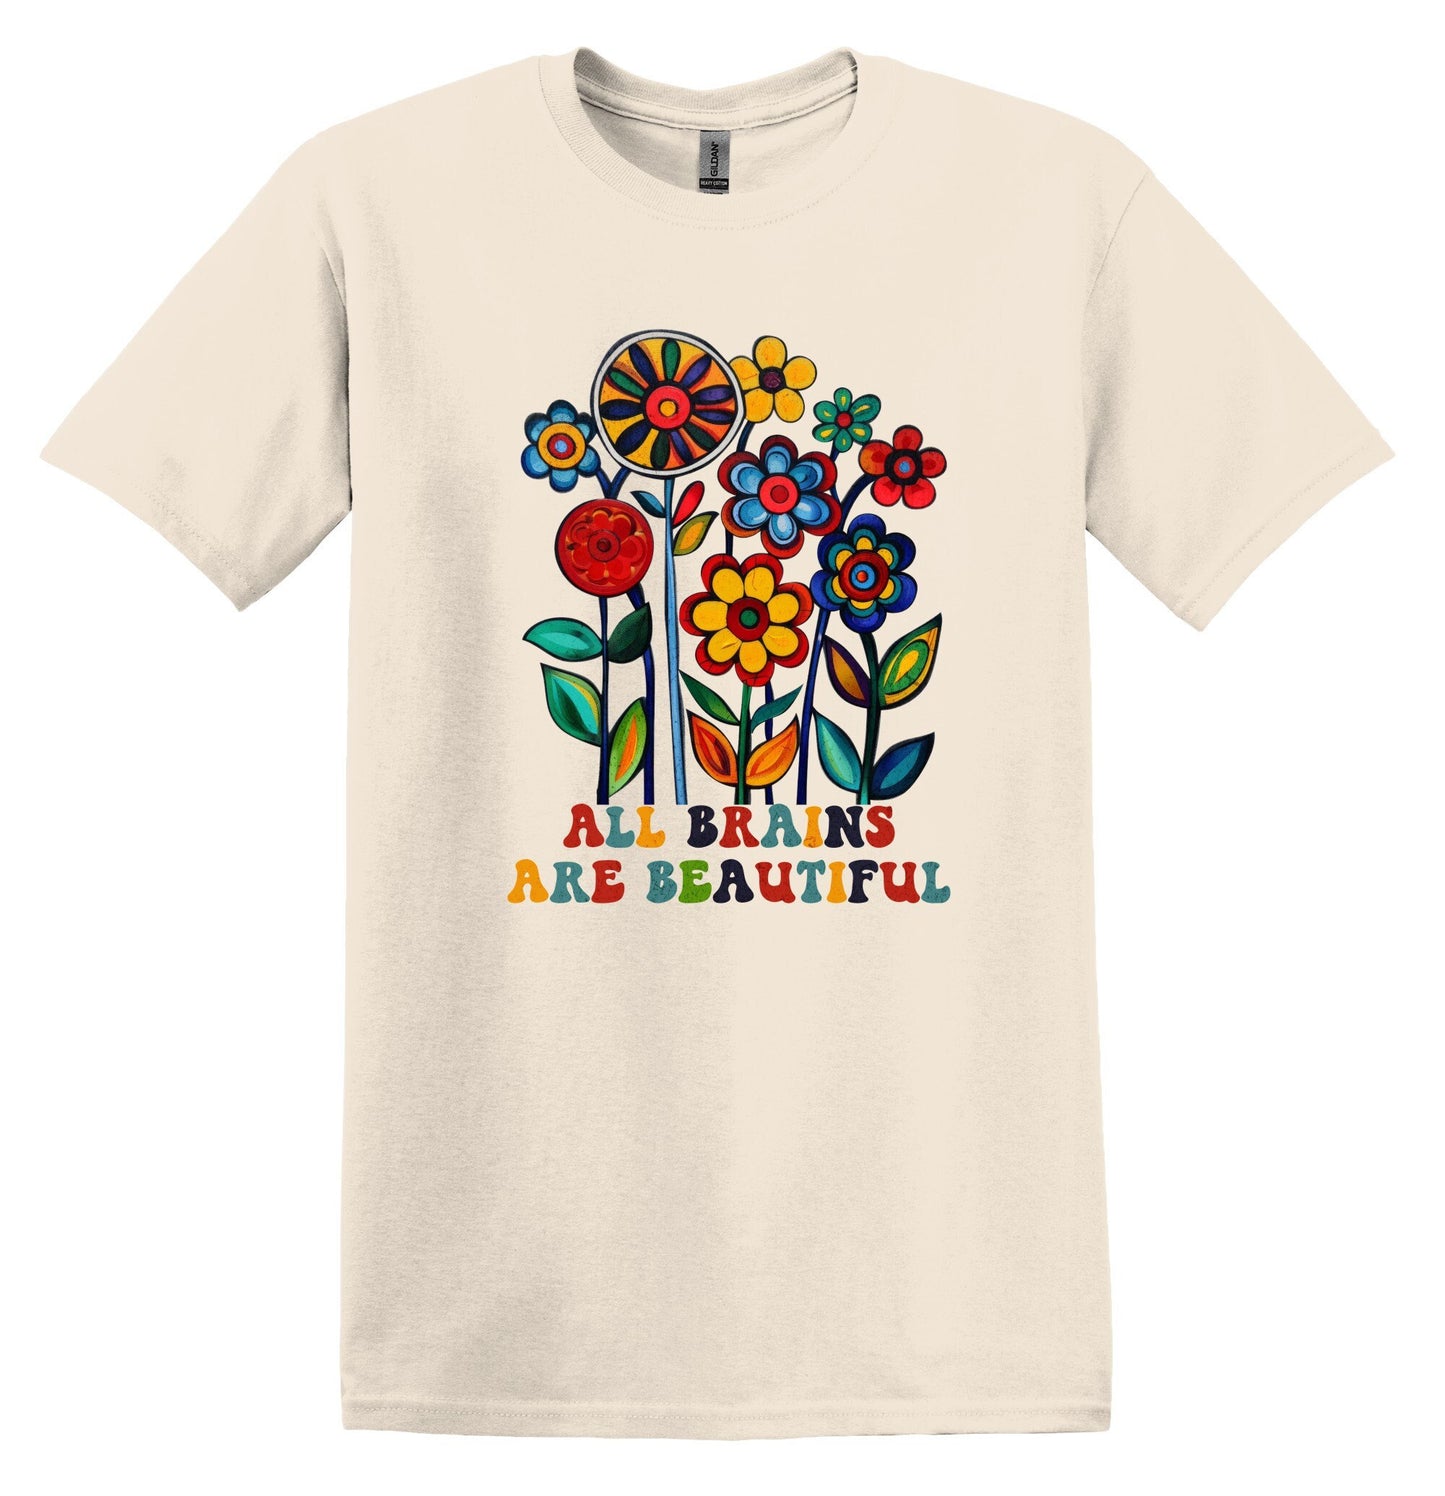 Neurodiversity Shirt, All Brains are Beautiful Shirt, Floral Neurodiversity Shirt, FlowerShirt, Floral Shirt, Mental Heath Shirt